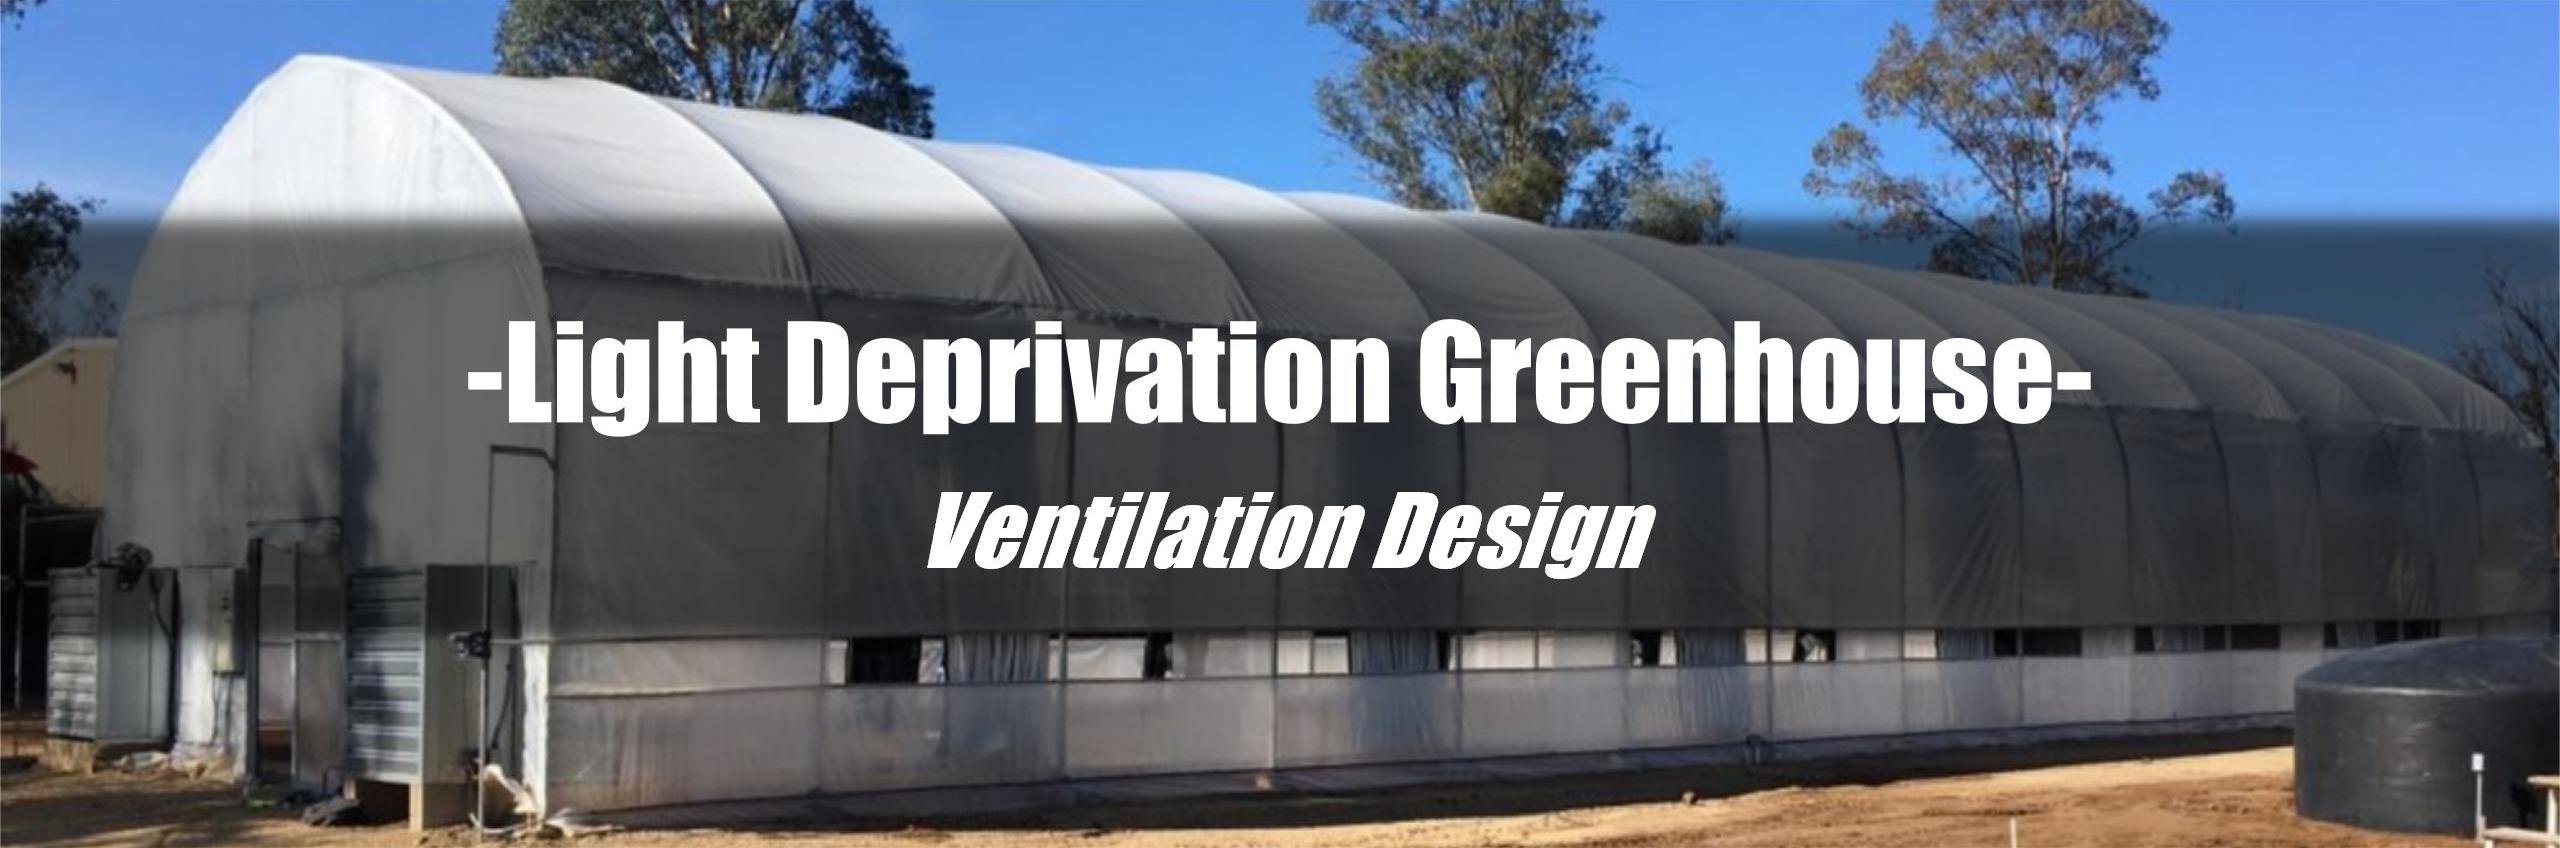 P1-light deprivation greenhouse